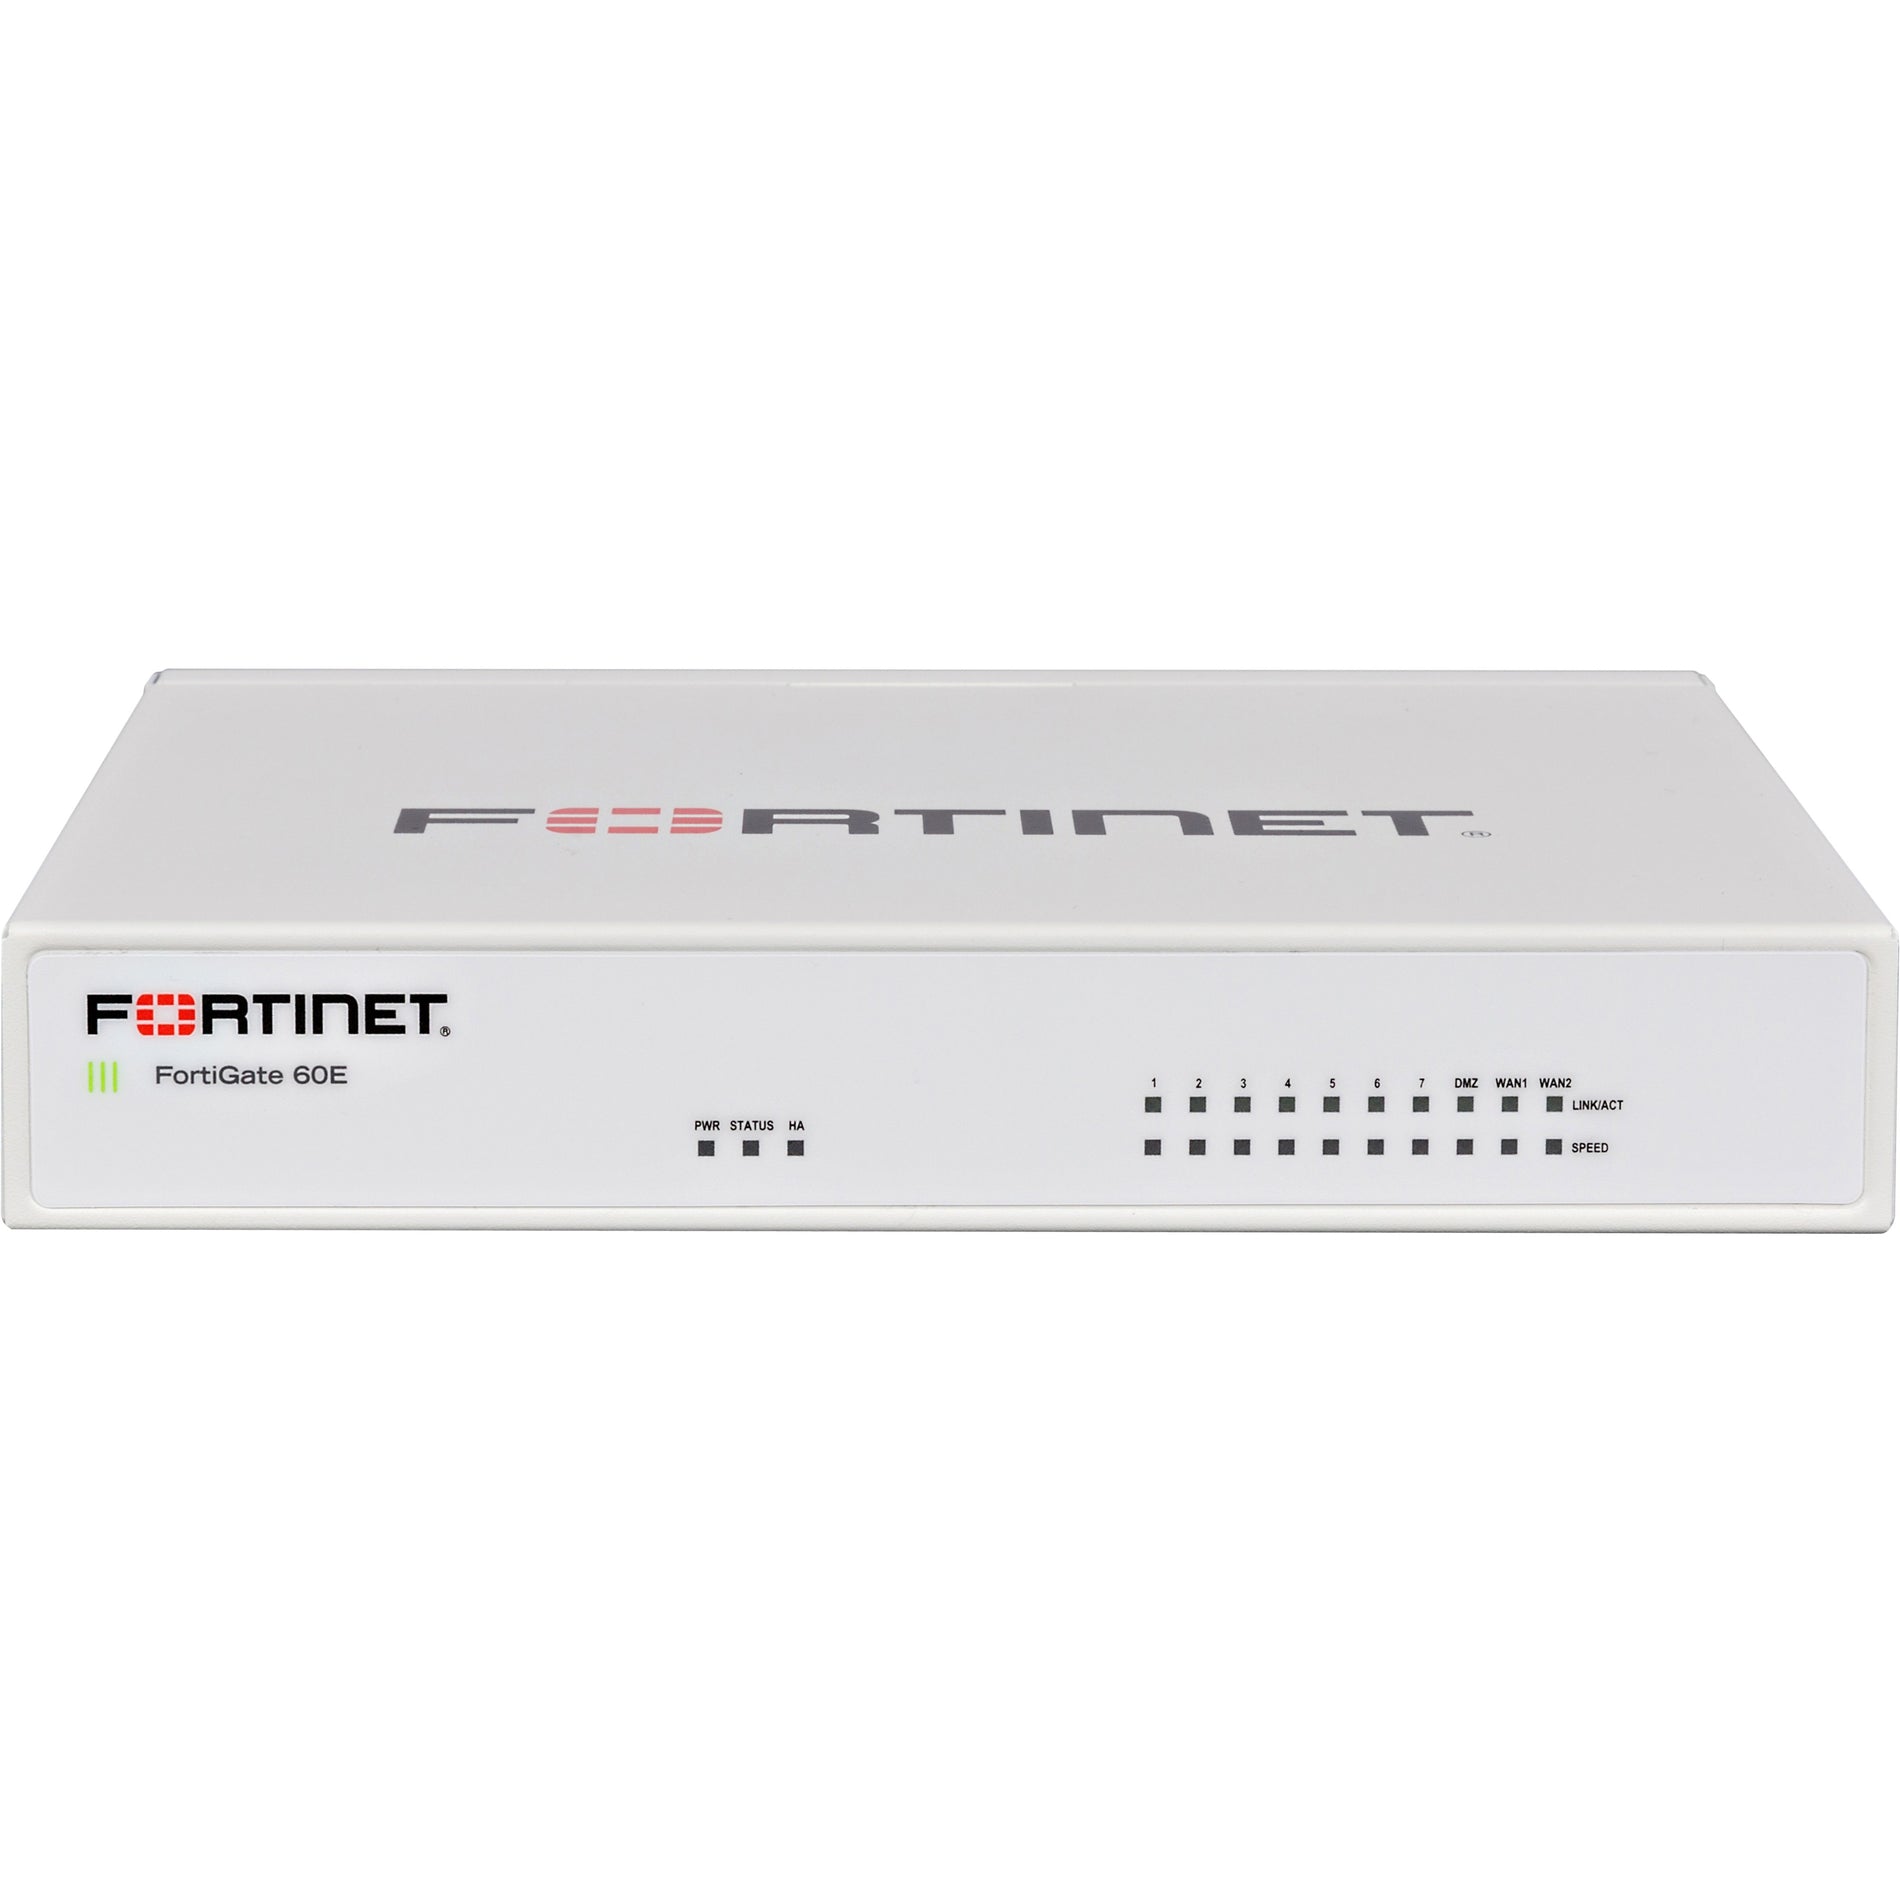 Fortinet FG-60E-POE FortiGate 60E Network Security/Firewall Appliance, 10 Ports, Gigabit Ethernet, AES (256-bit), SHA-1, Application Control, Antivirus, Threat Protection